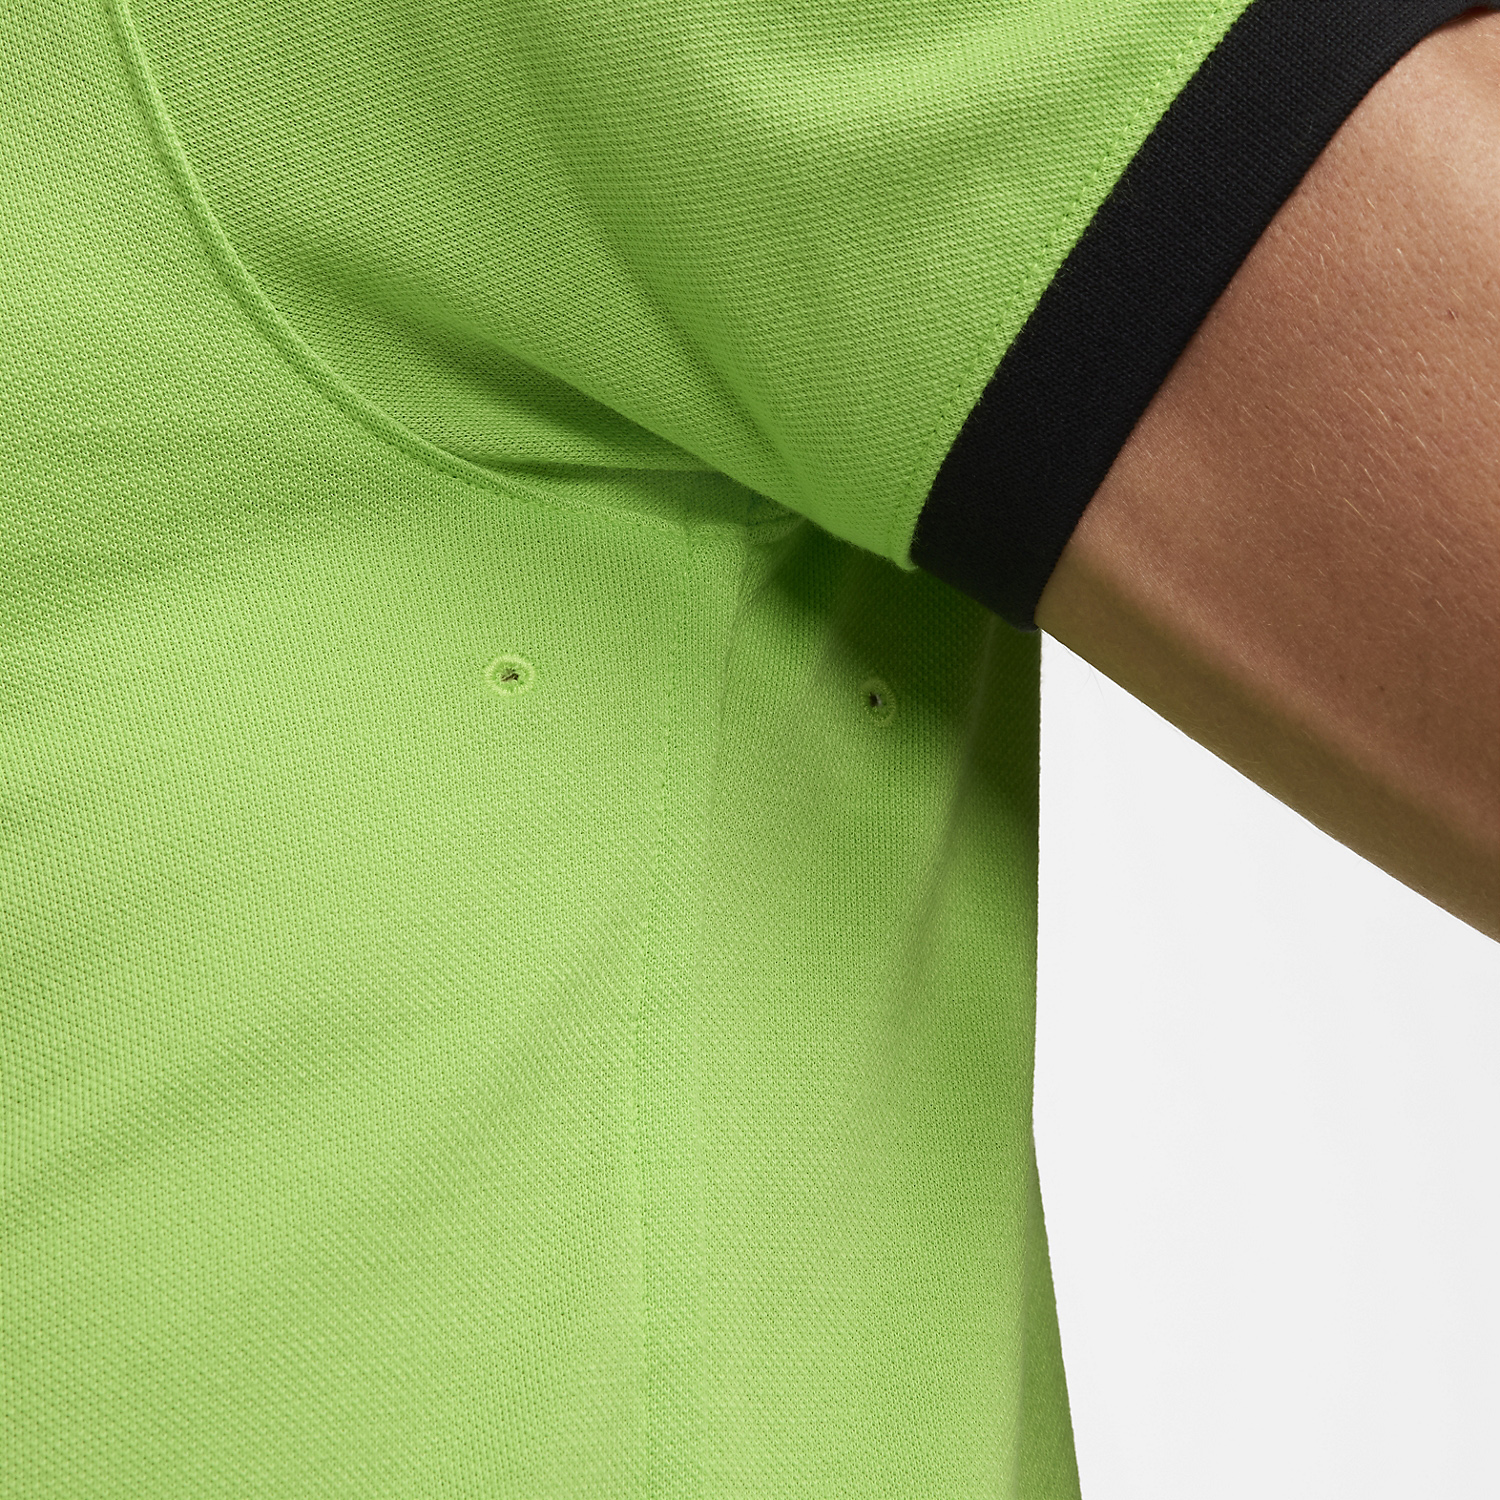 Nike Rafa Logo Men's Tennis Polo - Action Green/Light Lemon Twist